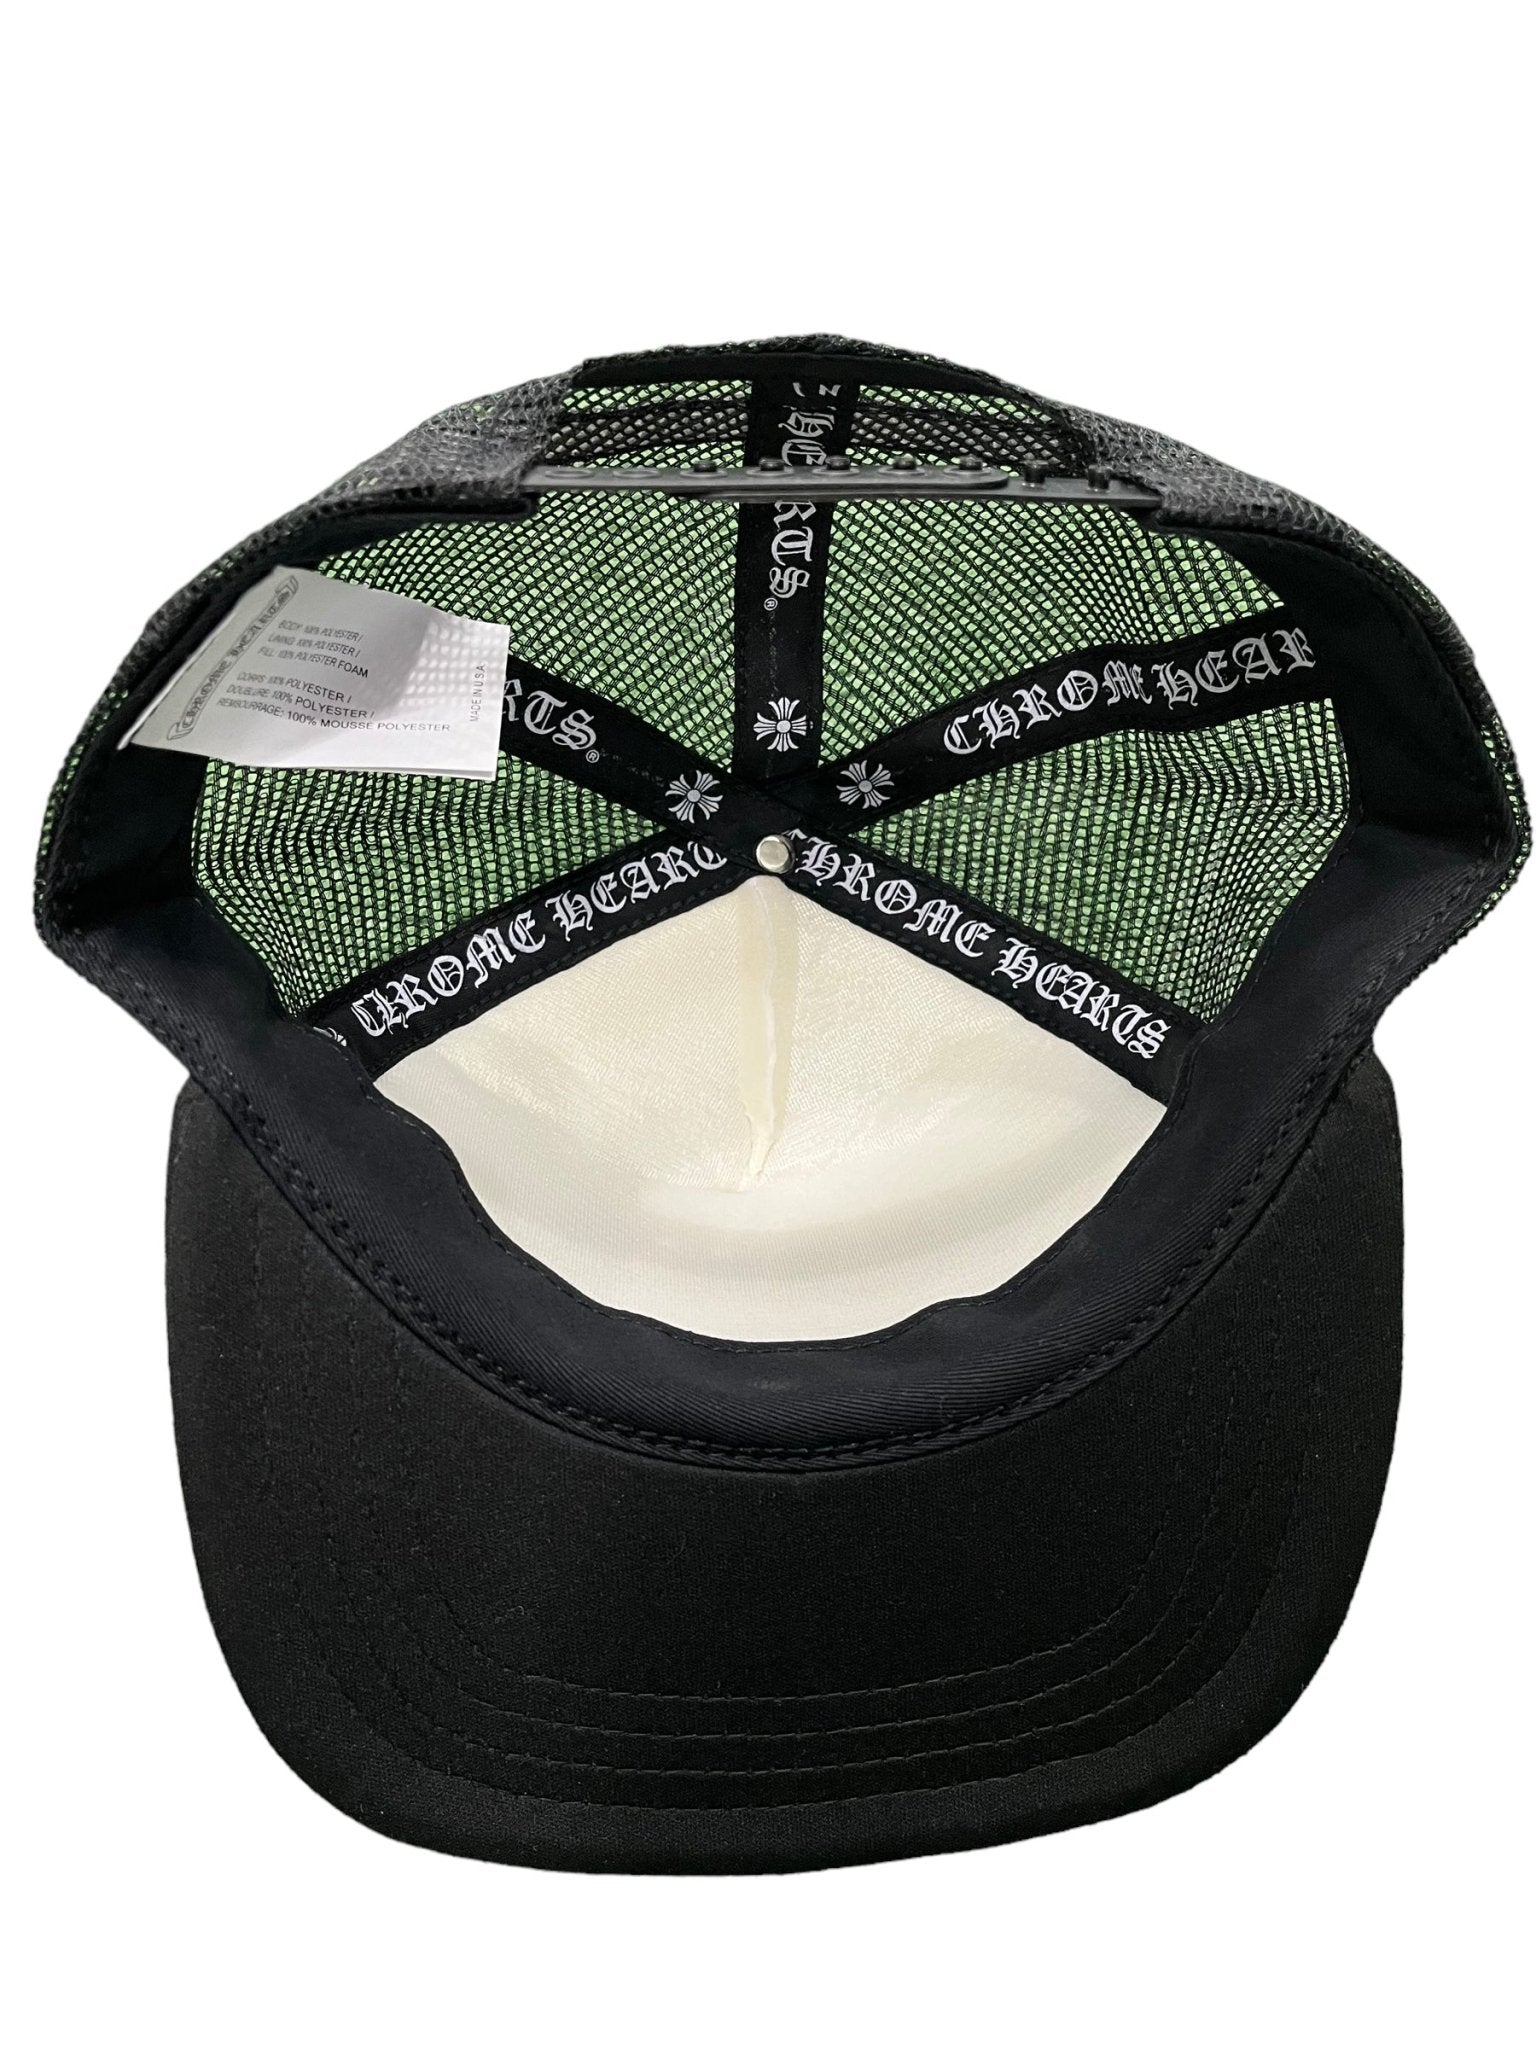 Chrome Hearts King Taco Camo Cross Trucker Hat Black / White - Supra Sneakers